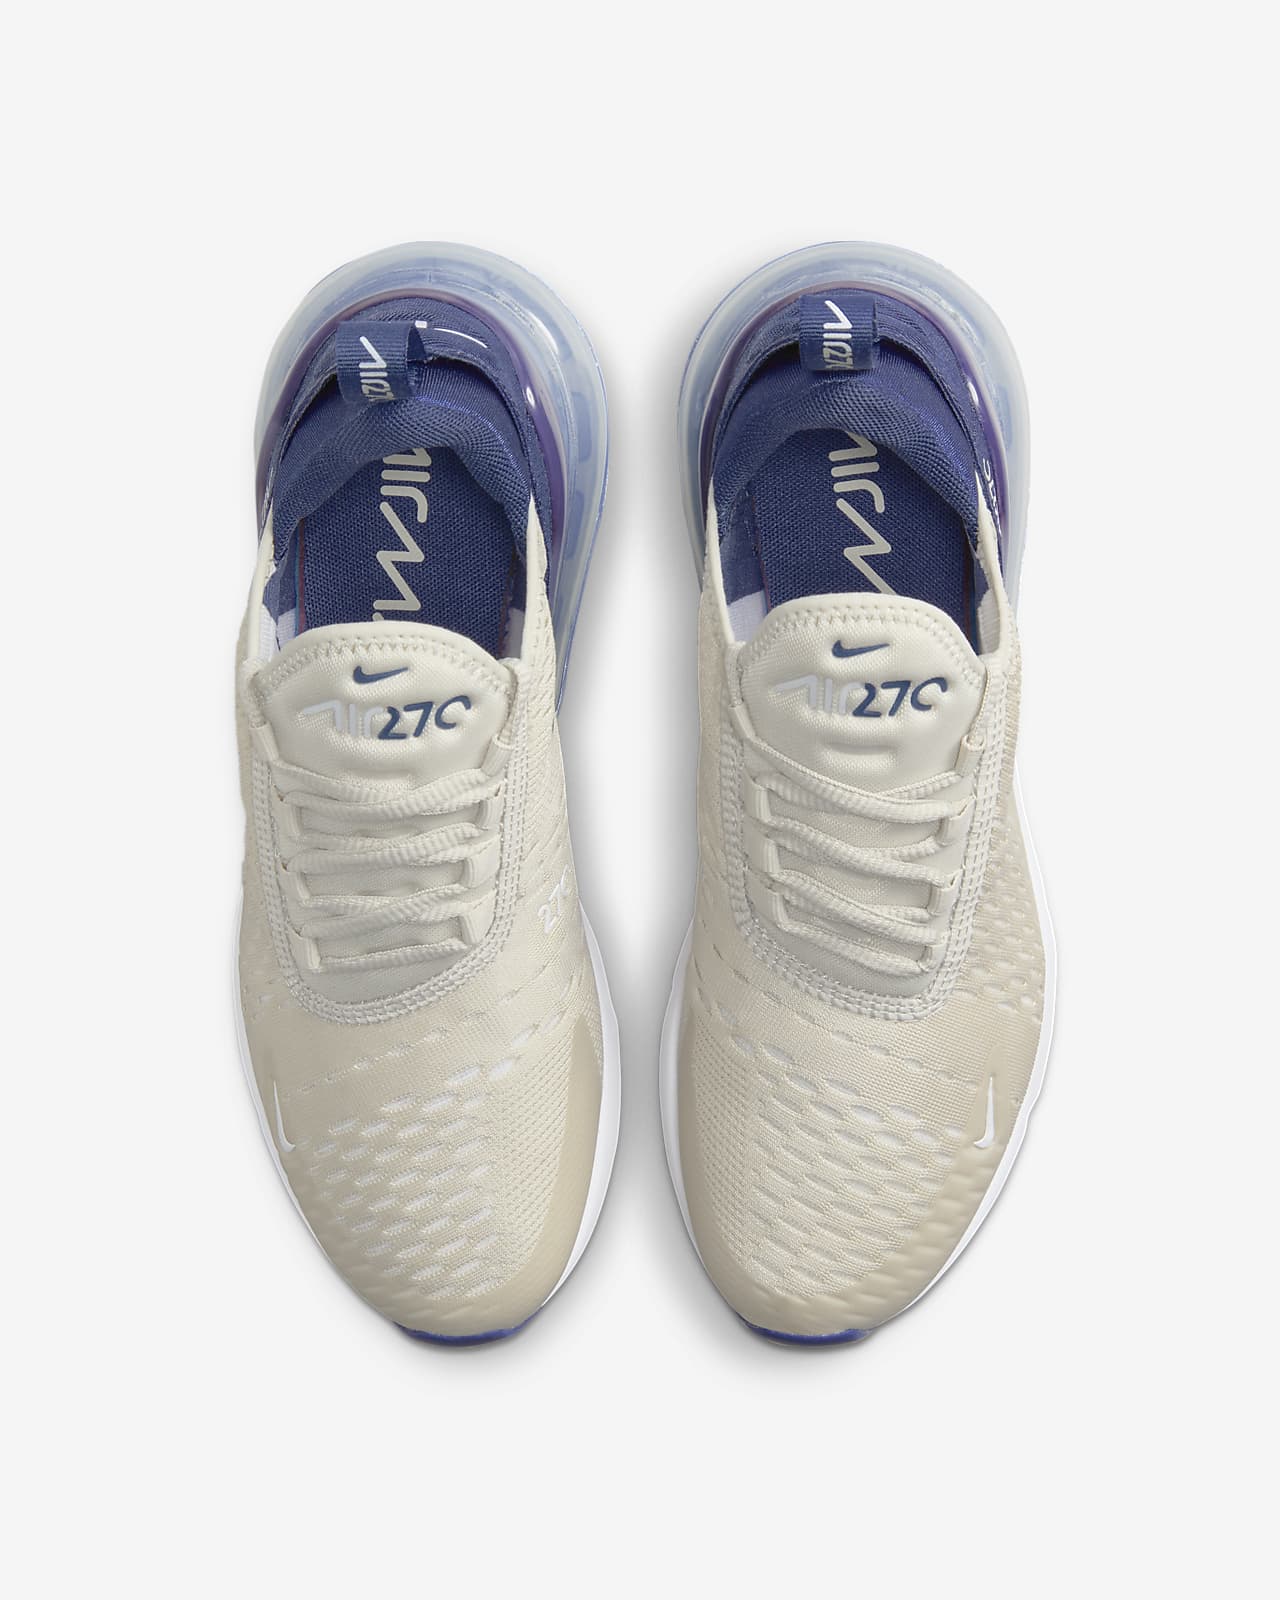 Nike Women's Air Max 270 Shoes